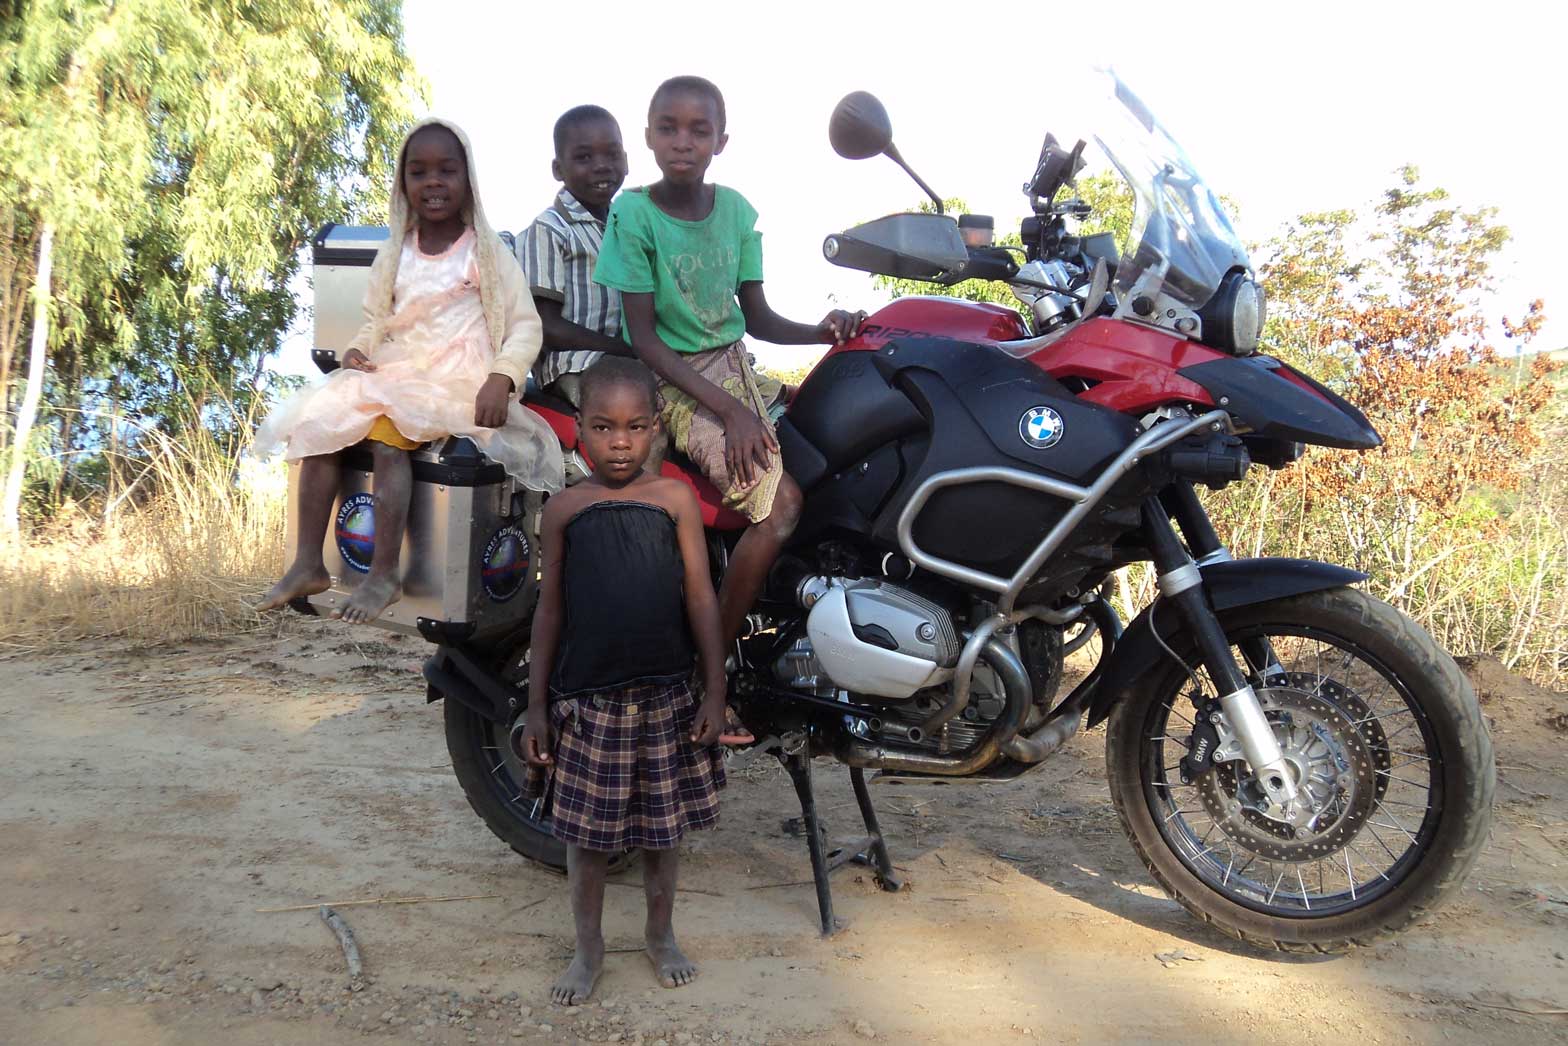 Local Malawian children